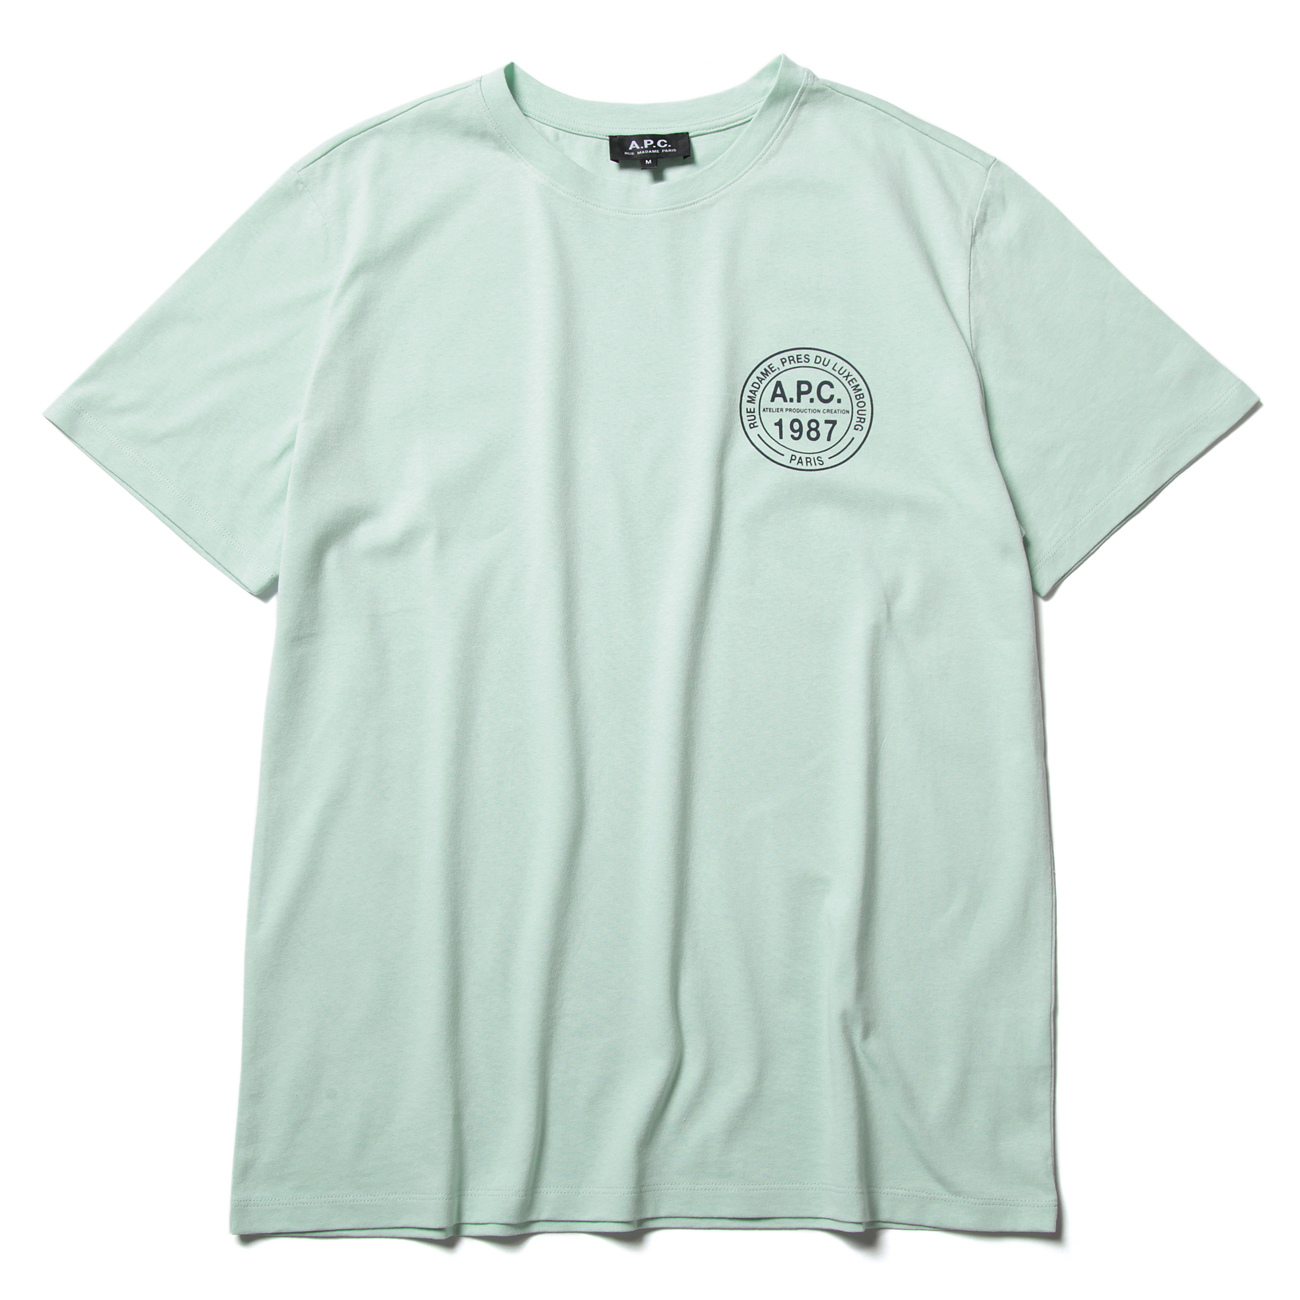 APC ■ ollie Tシャツ white sizeL